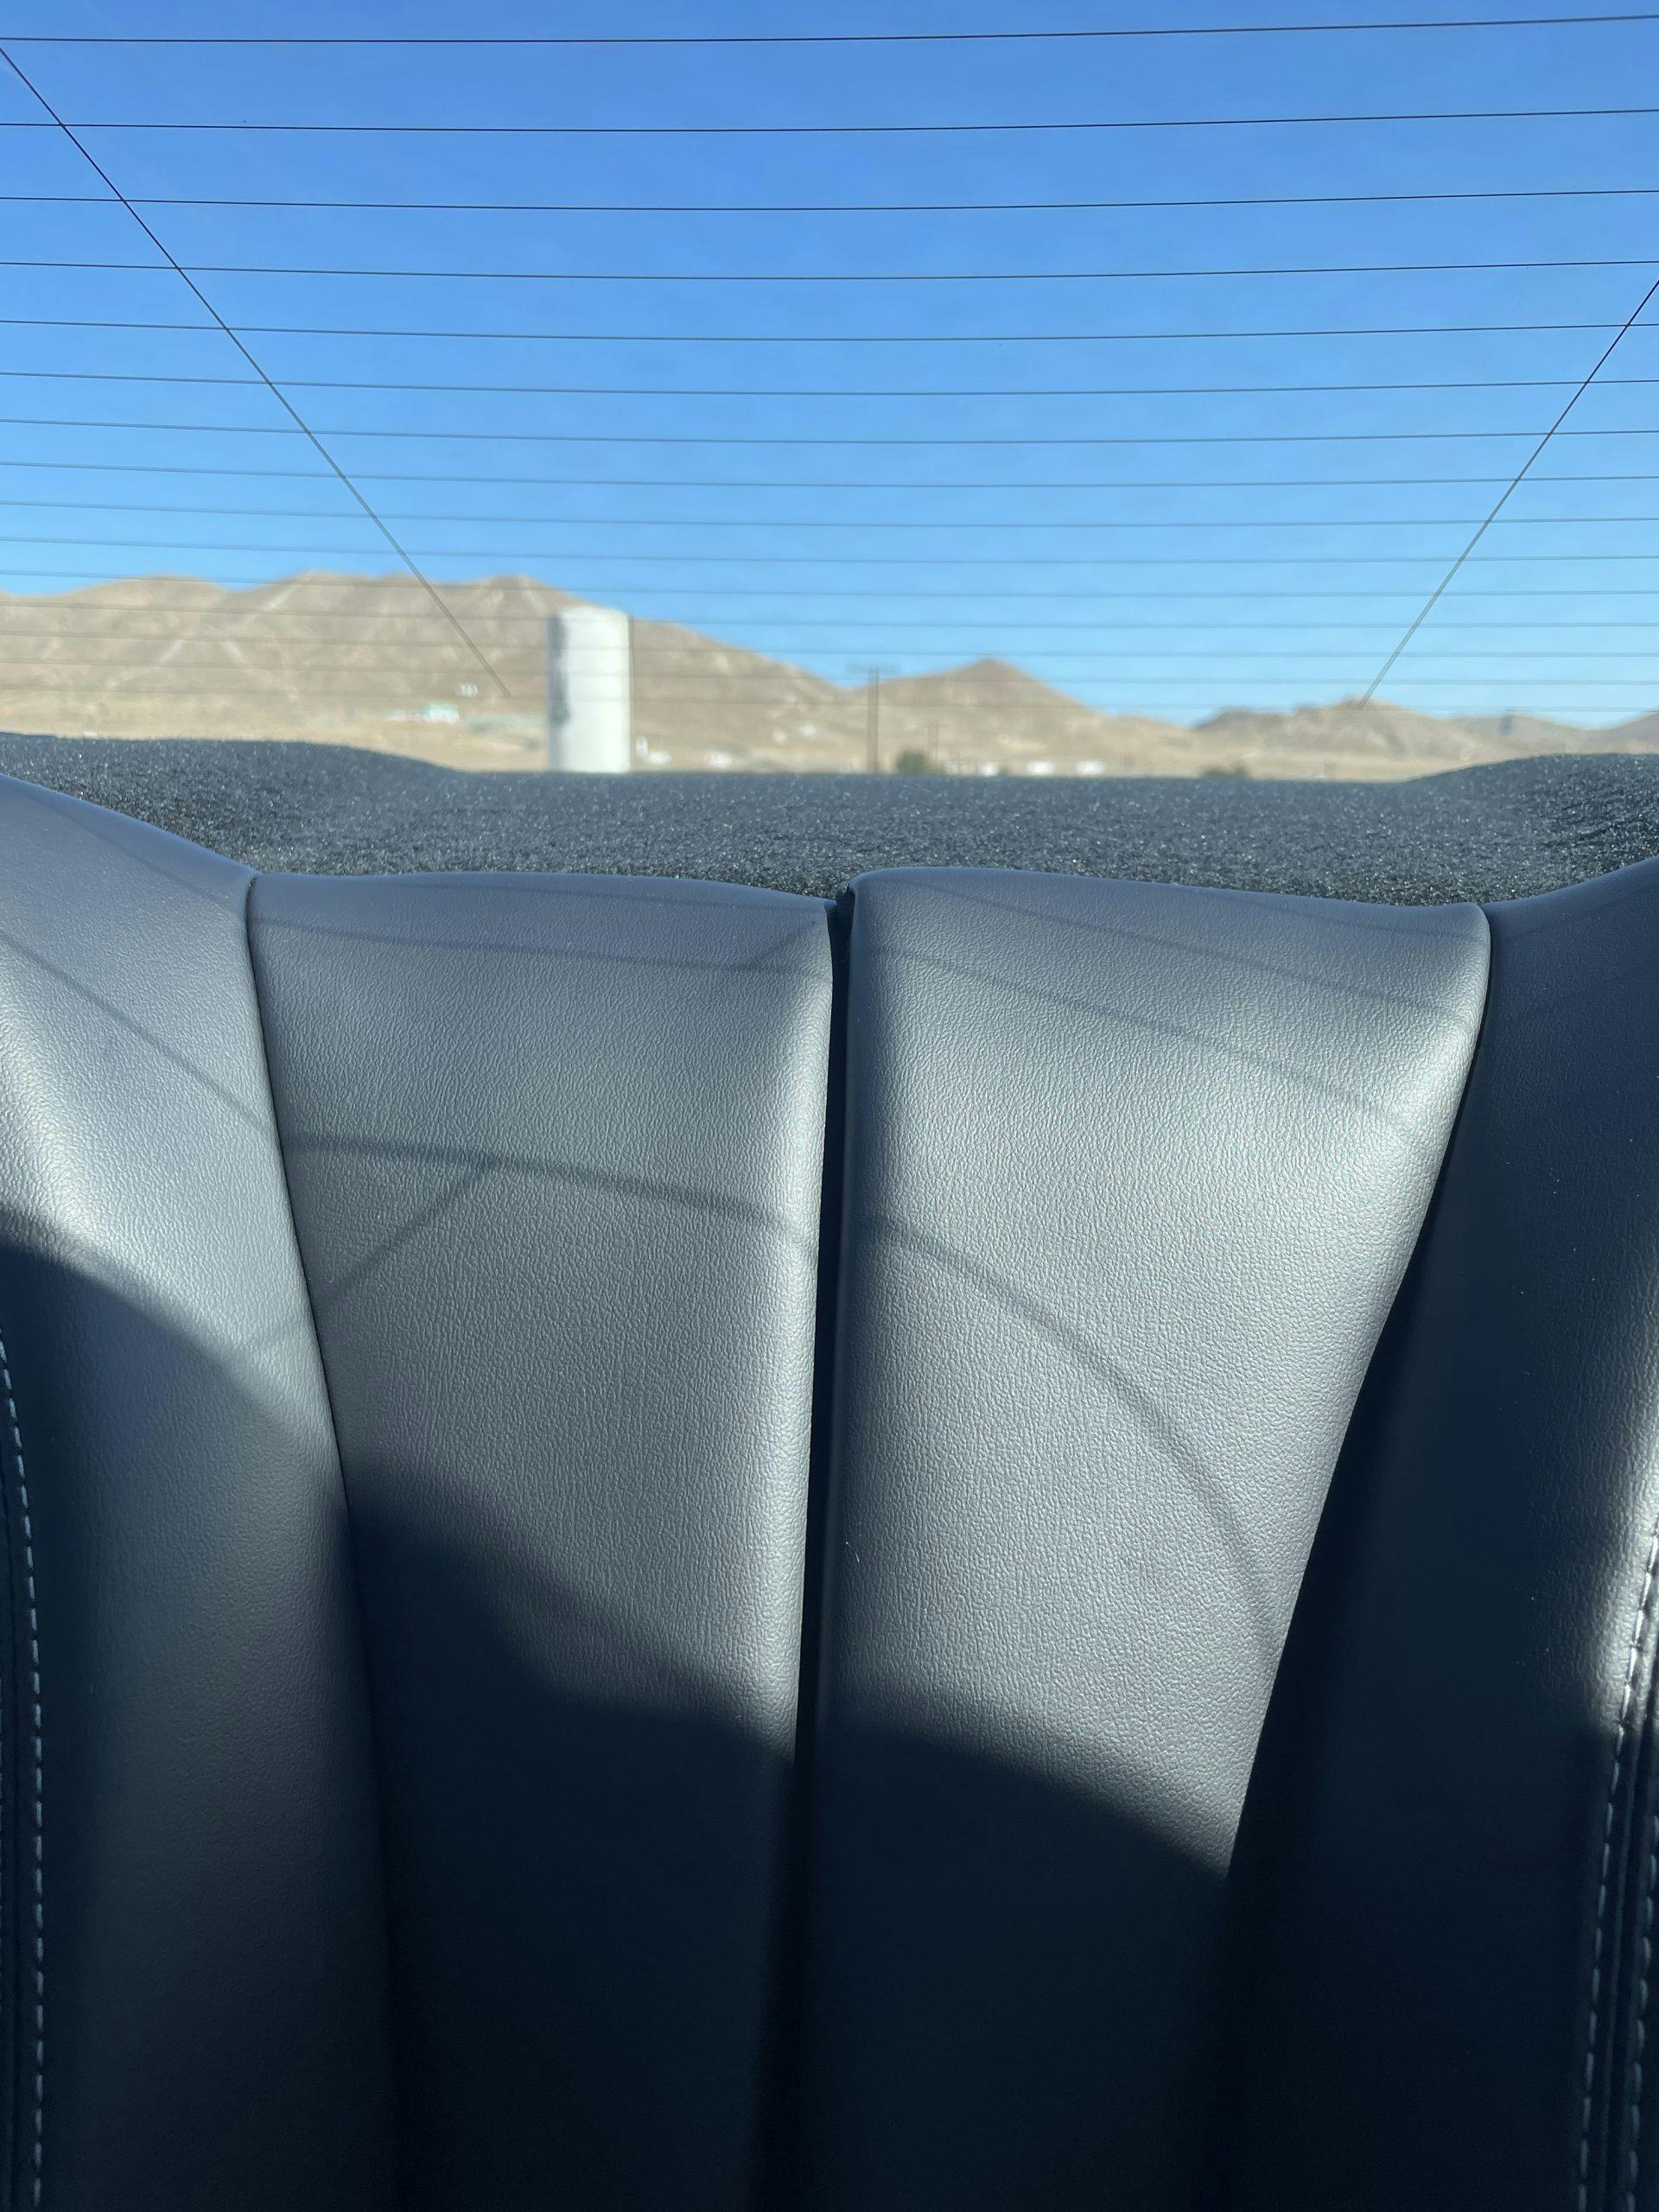 New Mustang Mach 1 rear seat seam